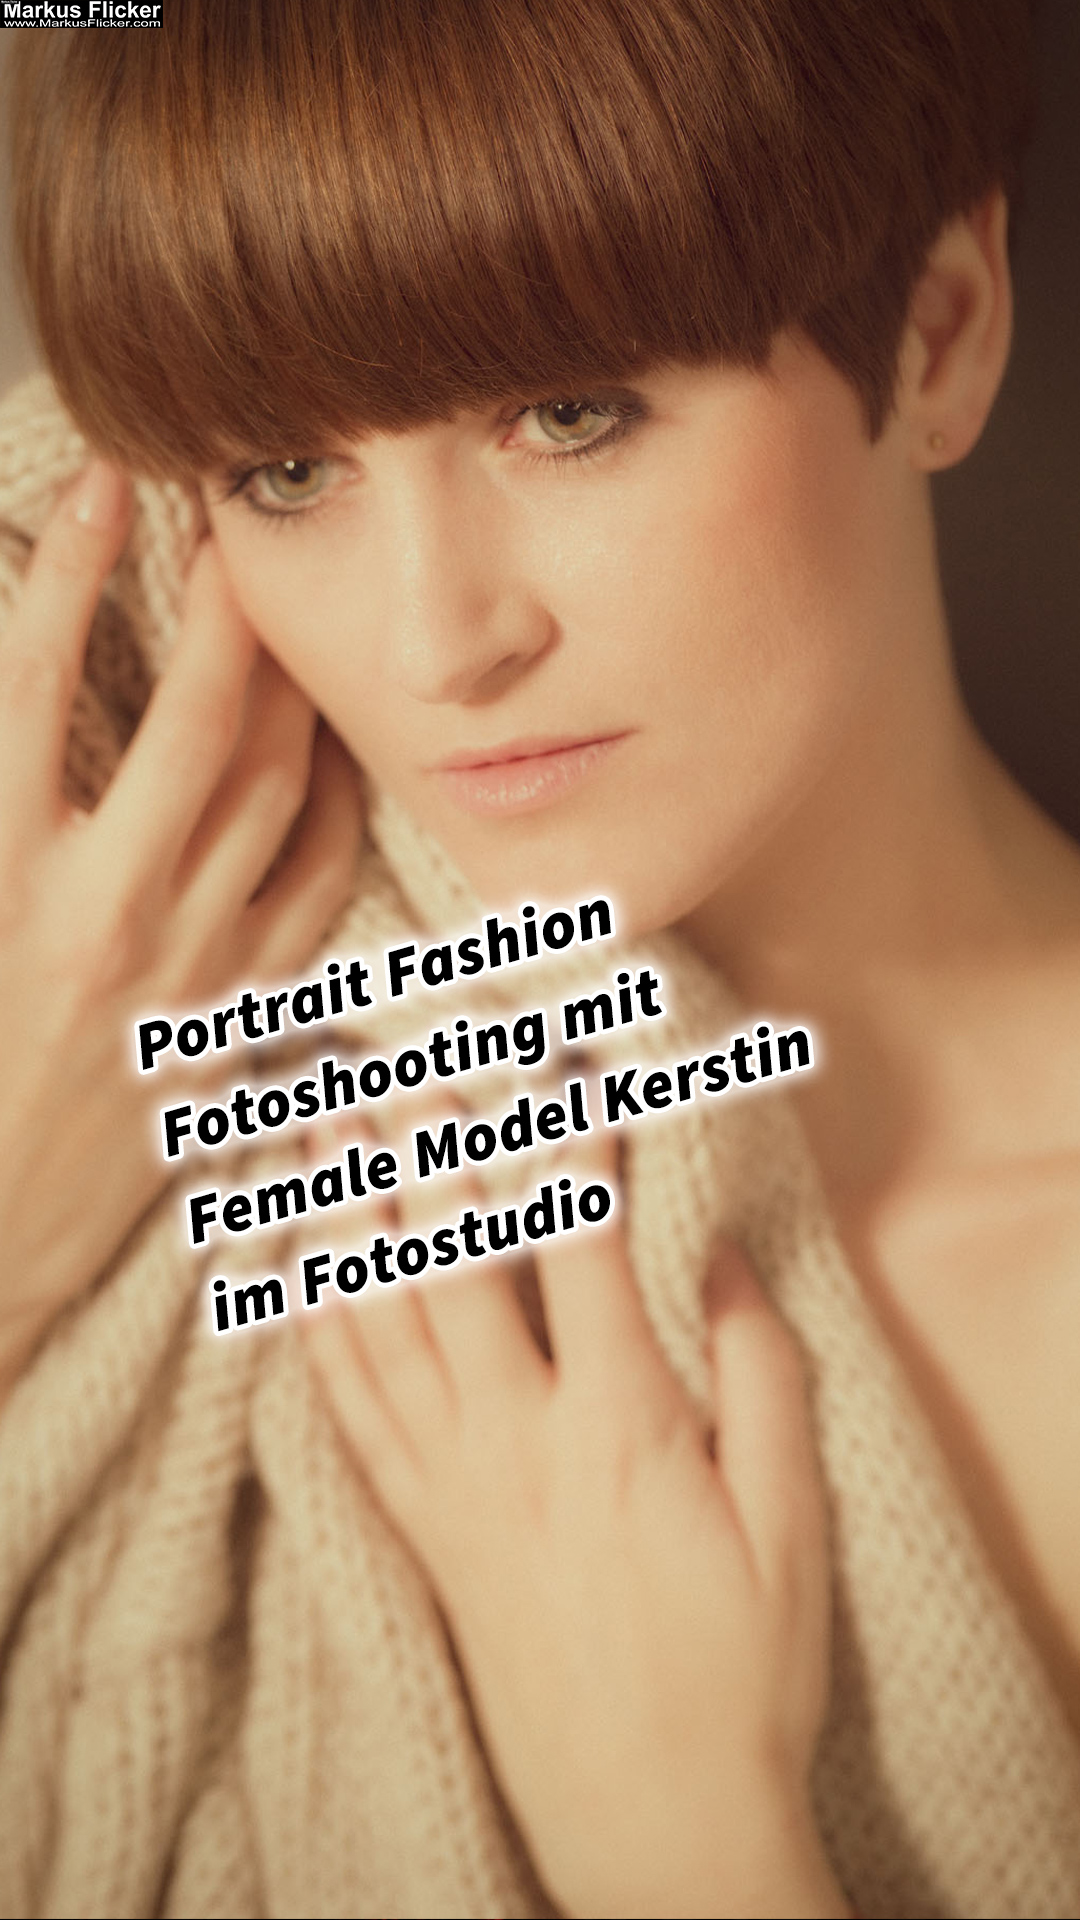 Portrait Fashion Fotoshooting mit Female Model Kerstin im Fotostudio